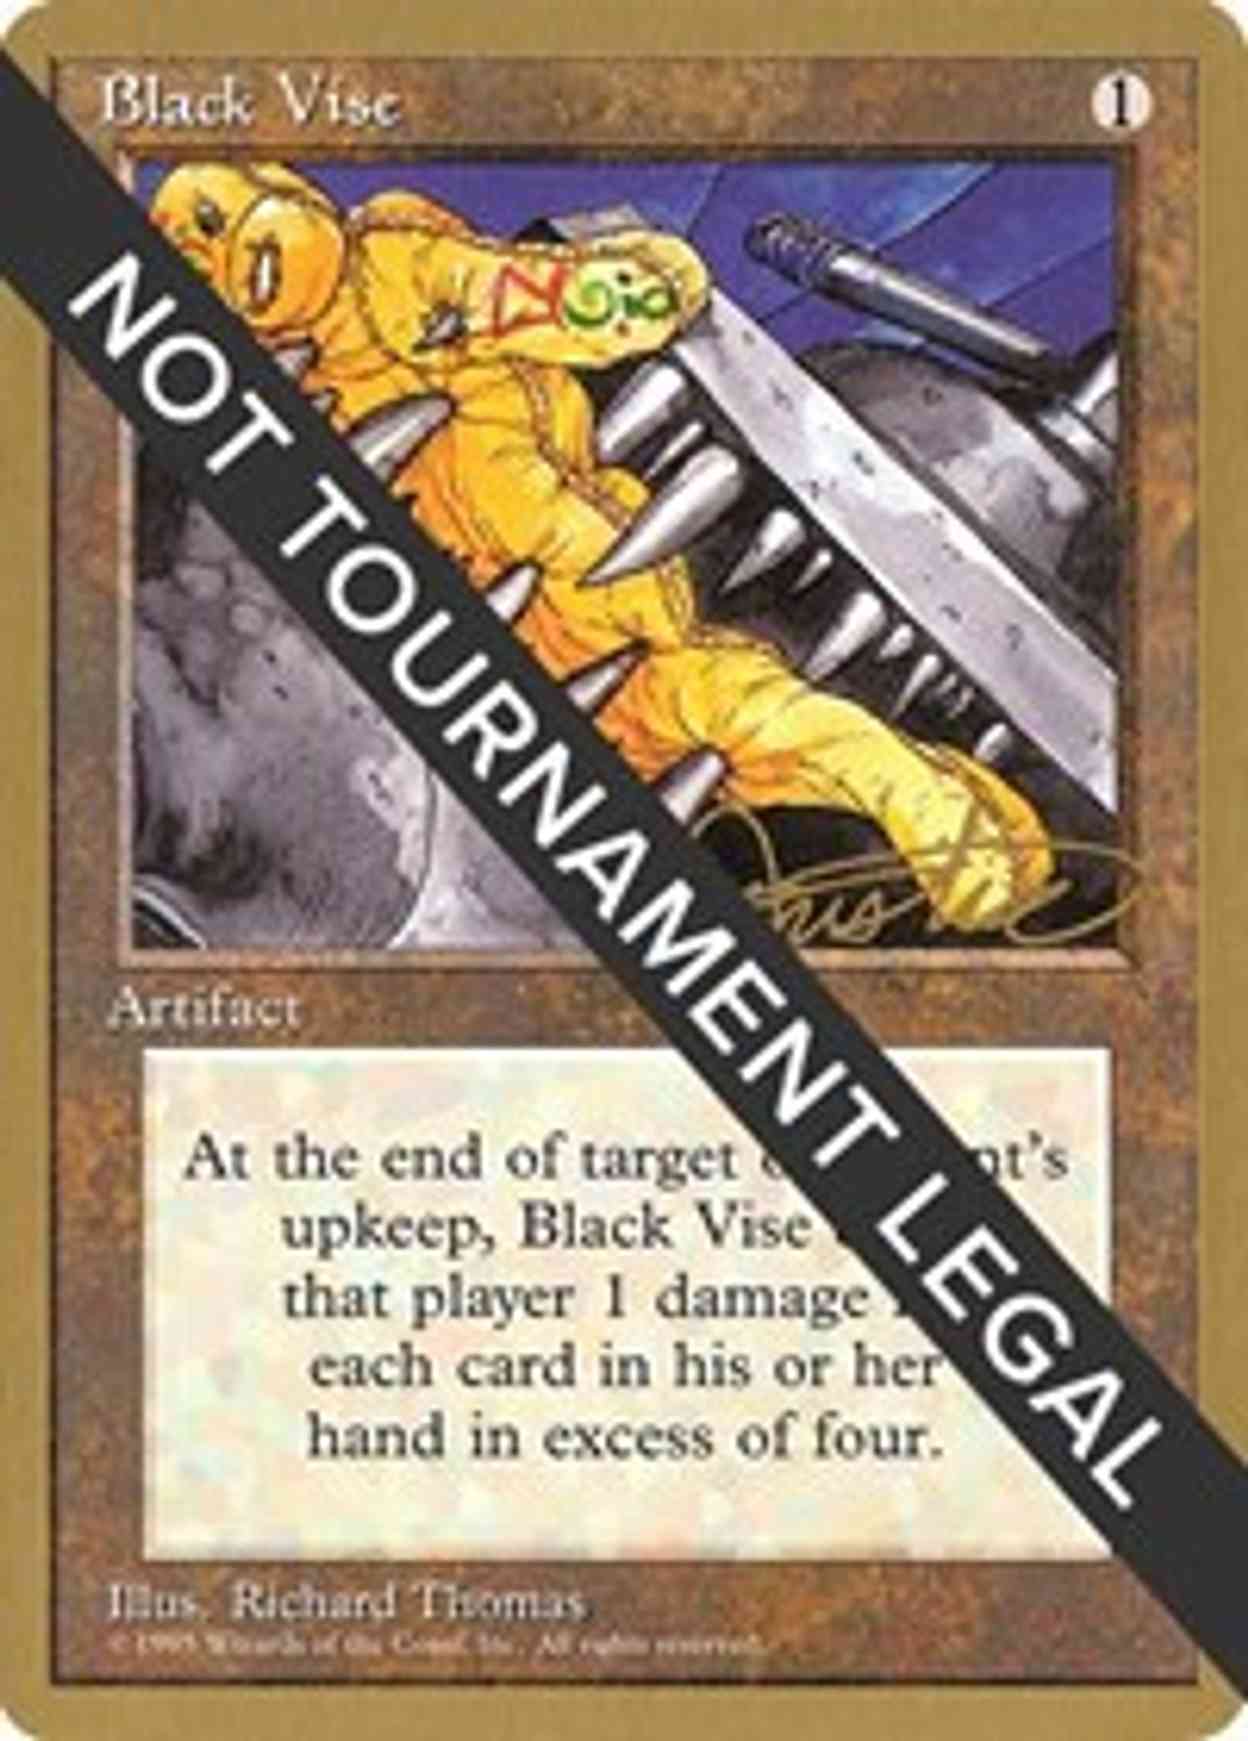 Black Vise - 1996 Mark Justice (4ED) magic card front